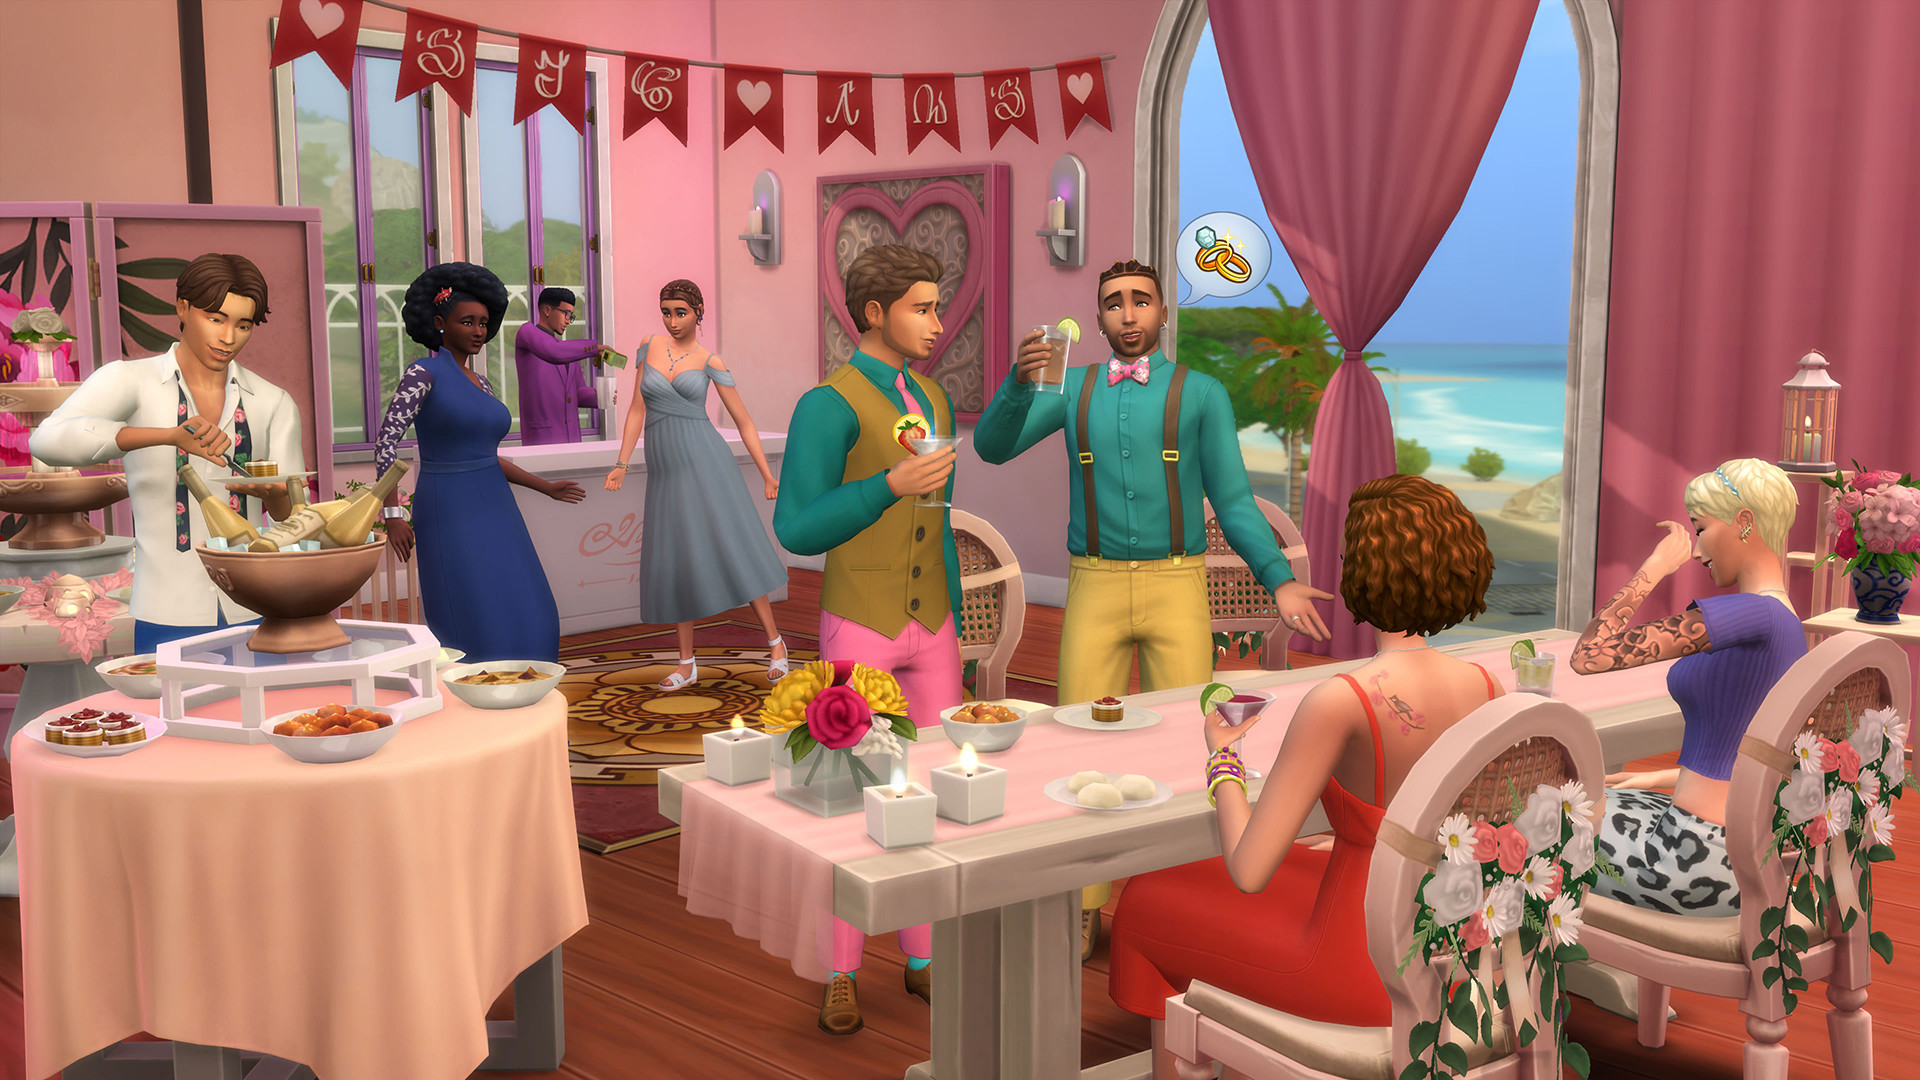 The Sims 4 - My Wedding Stories Game Pack DLC Origin CD Key, 18.07$